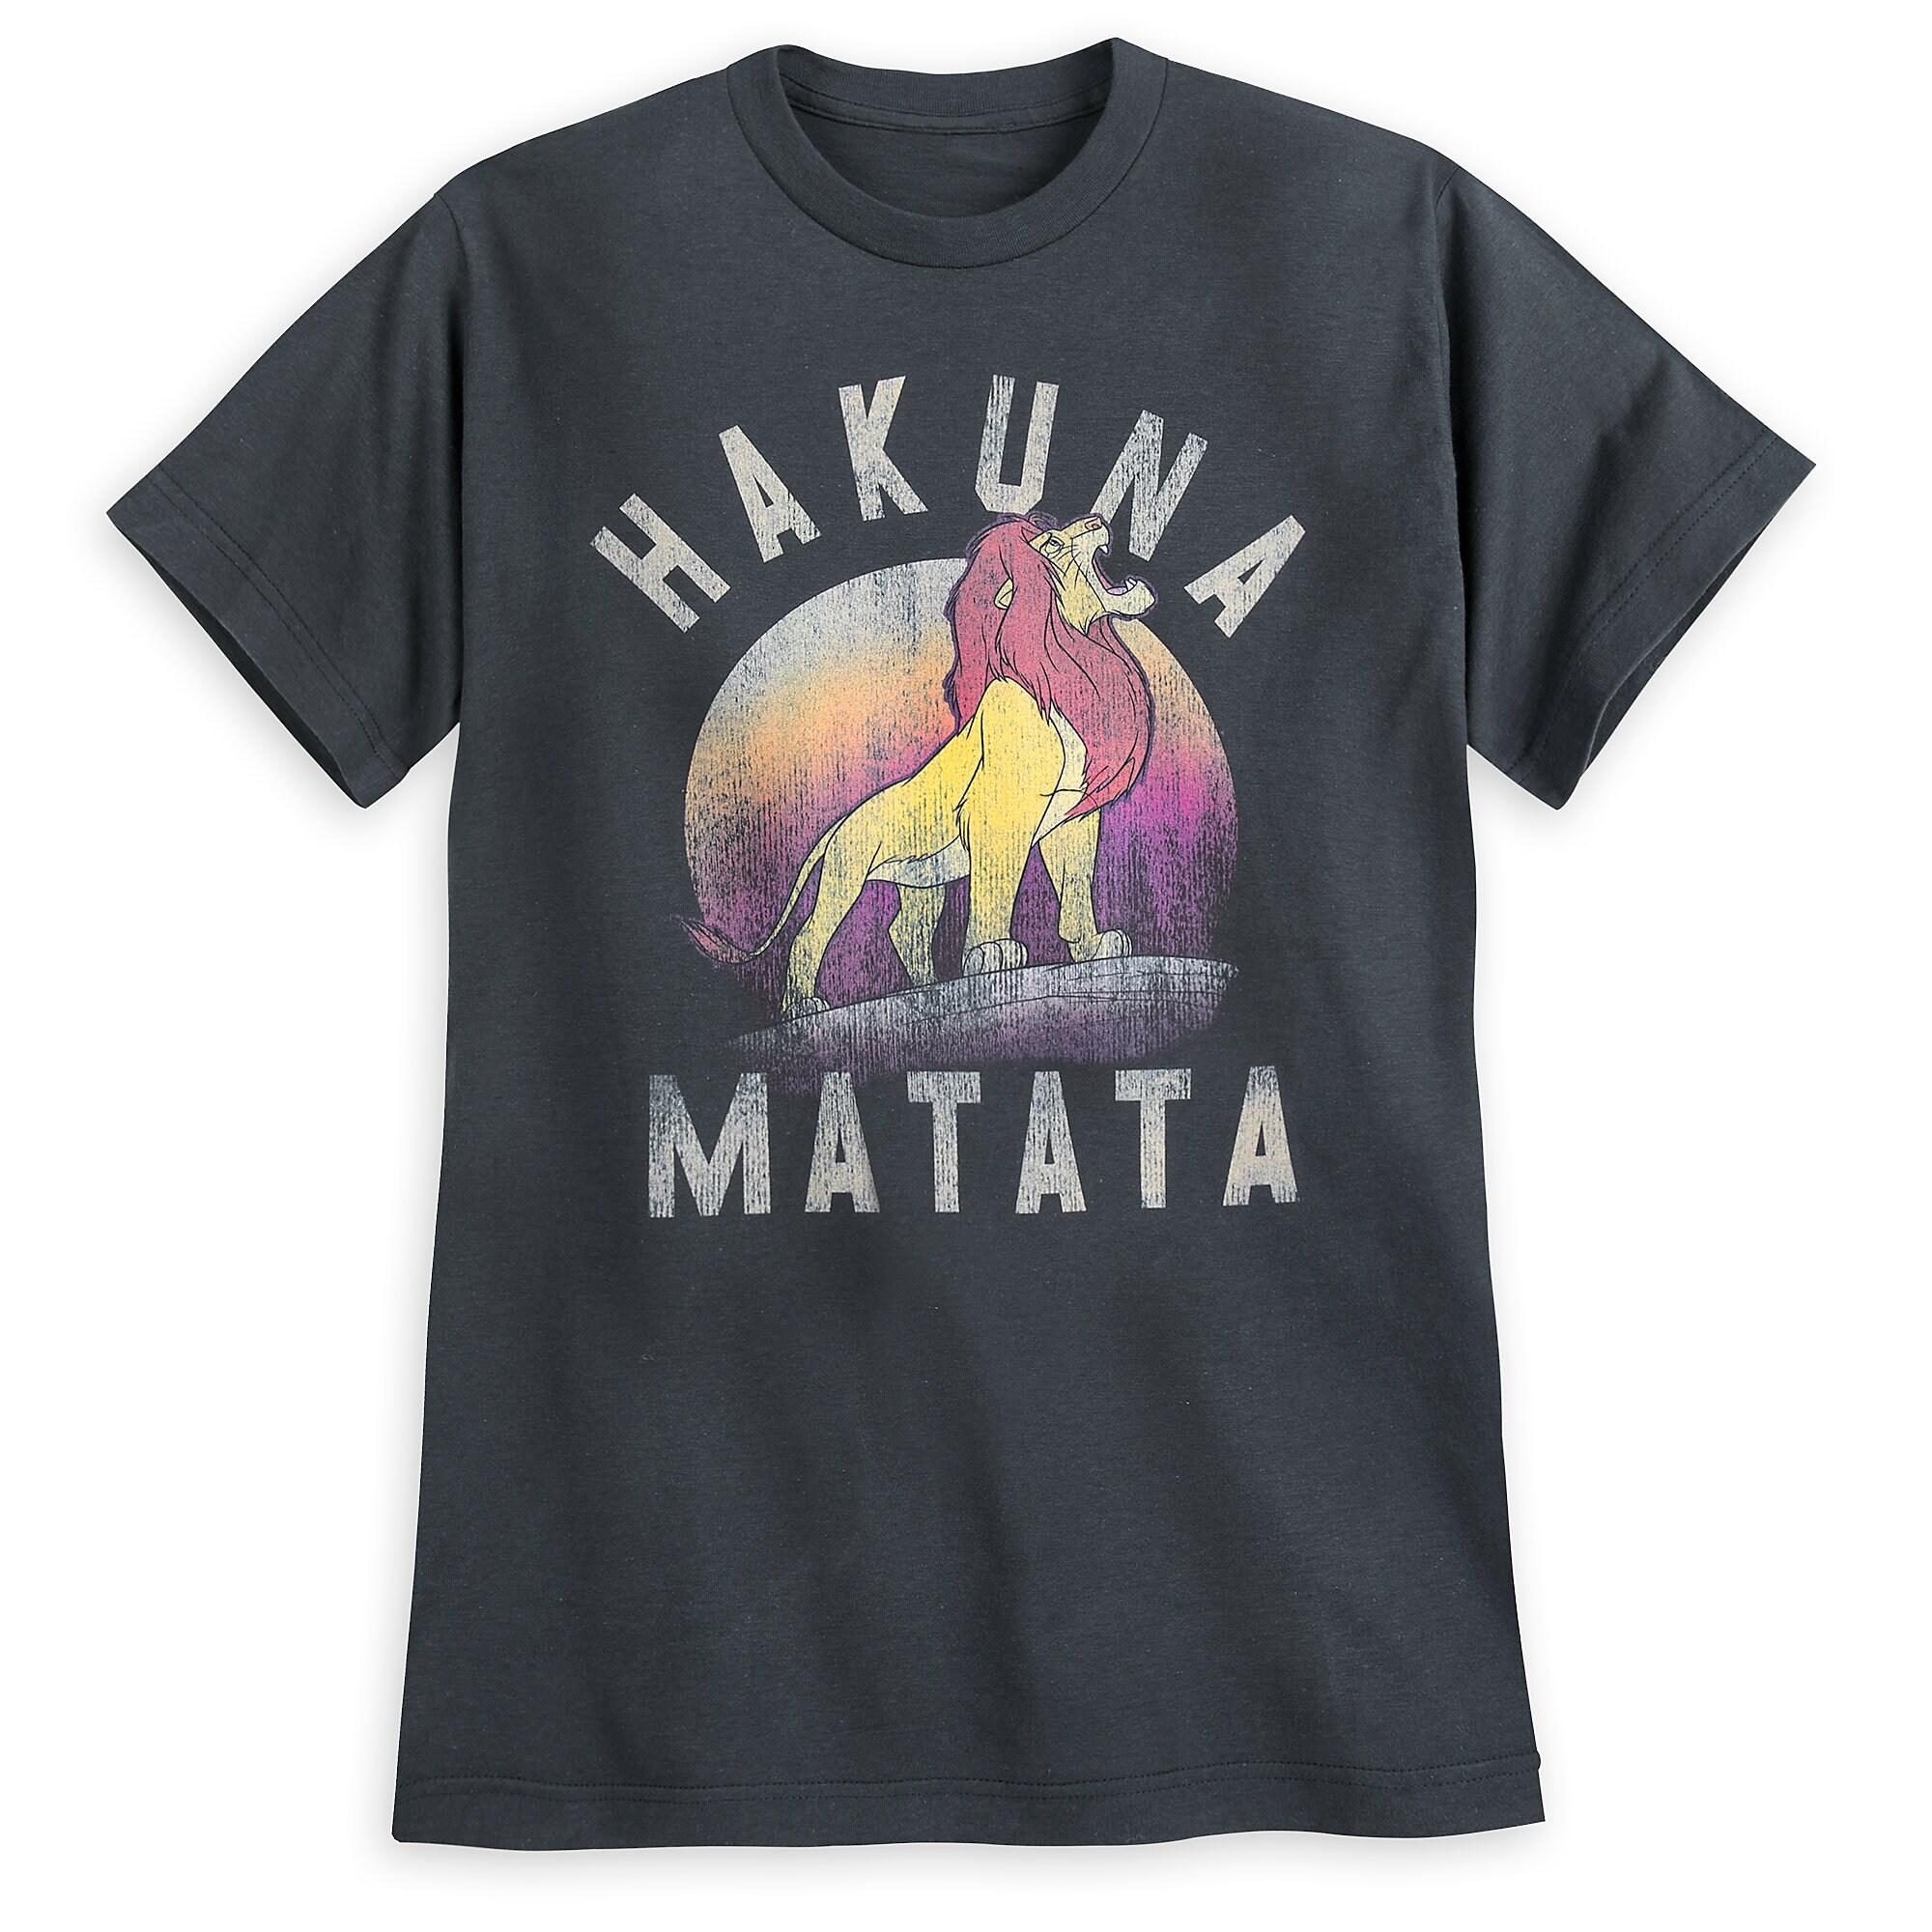 Mufasa T-Shirt for Men - The Lion King